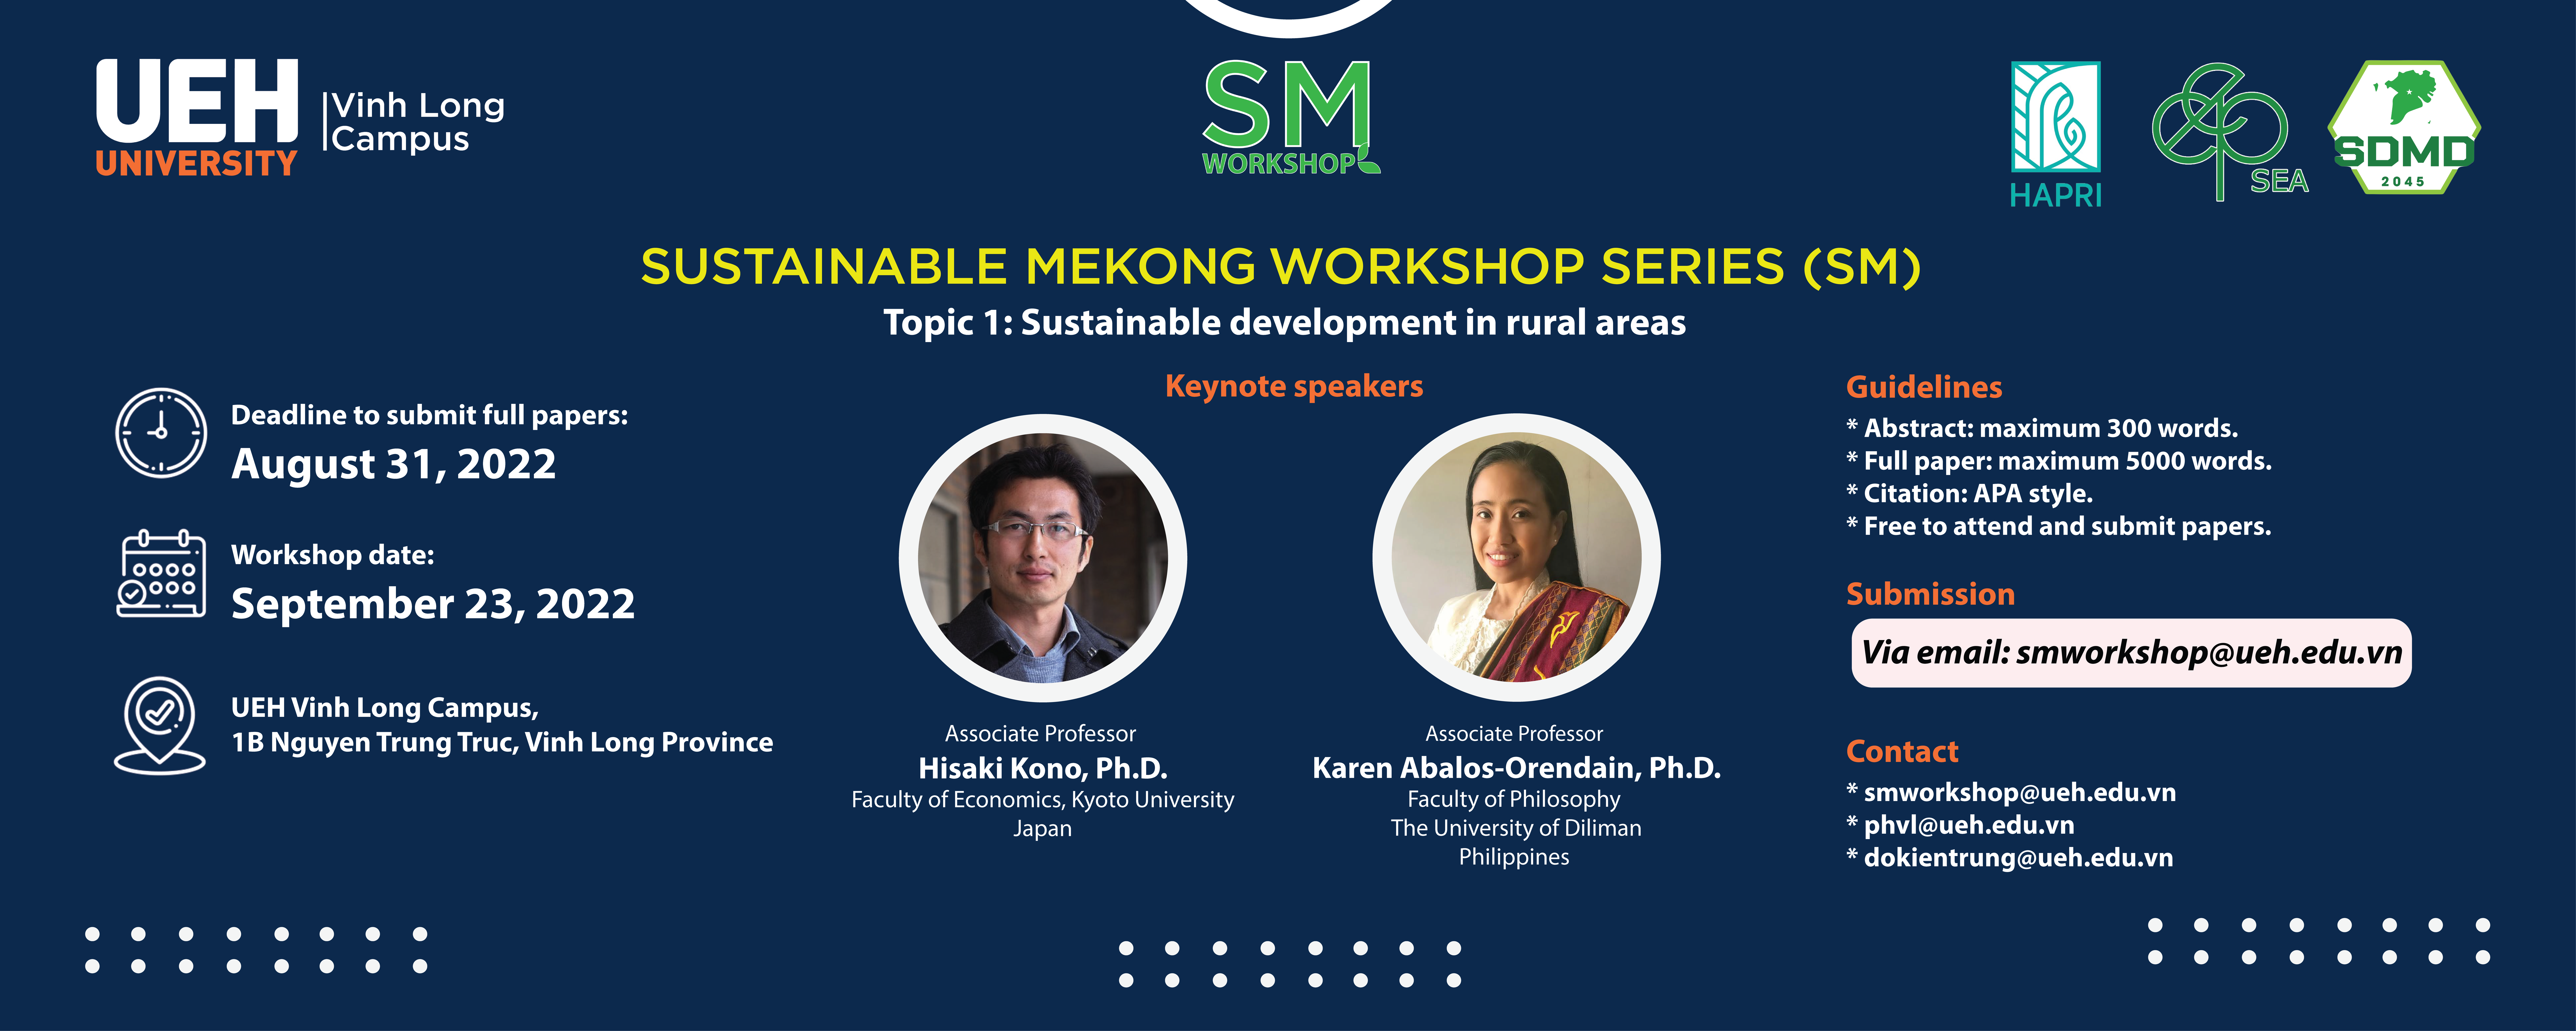 Sustainable Mekong Workshop Series 2022 (SM): “Sustainable development in rural areas”